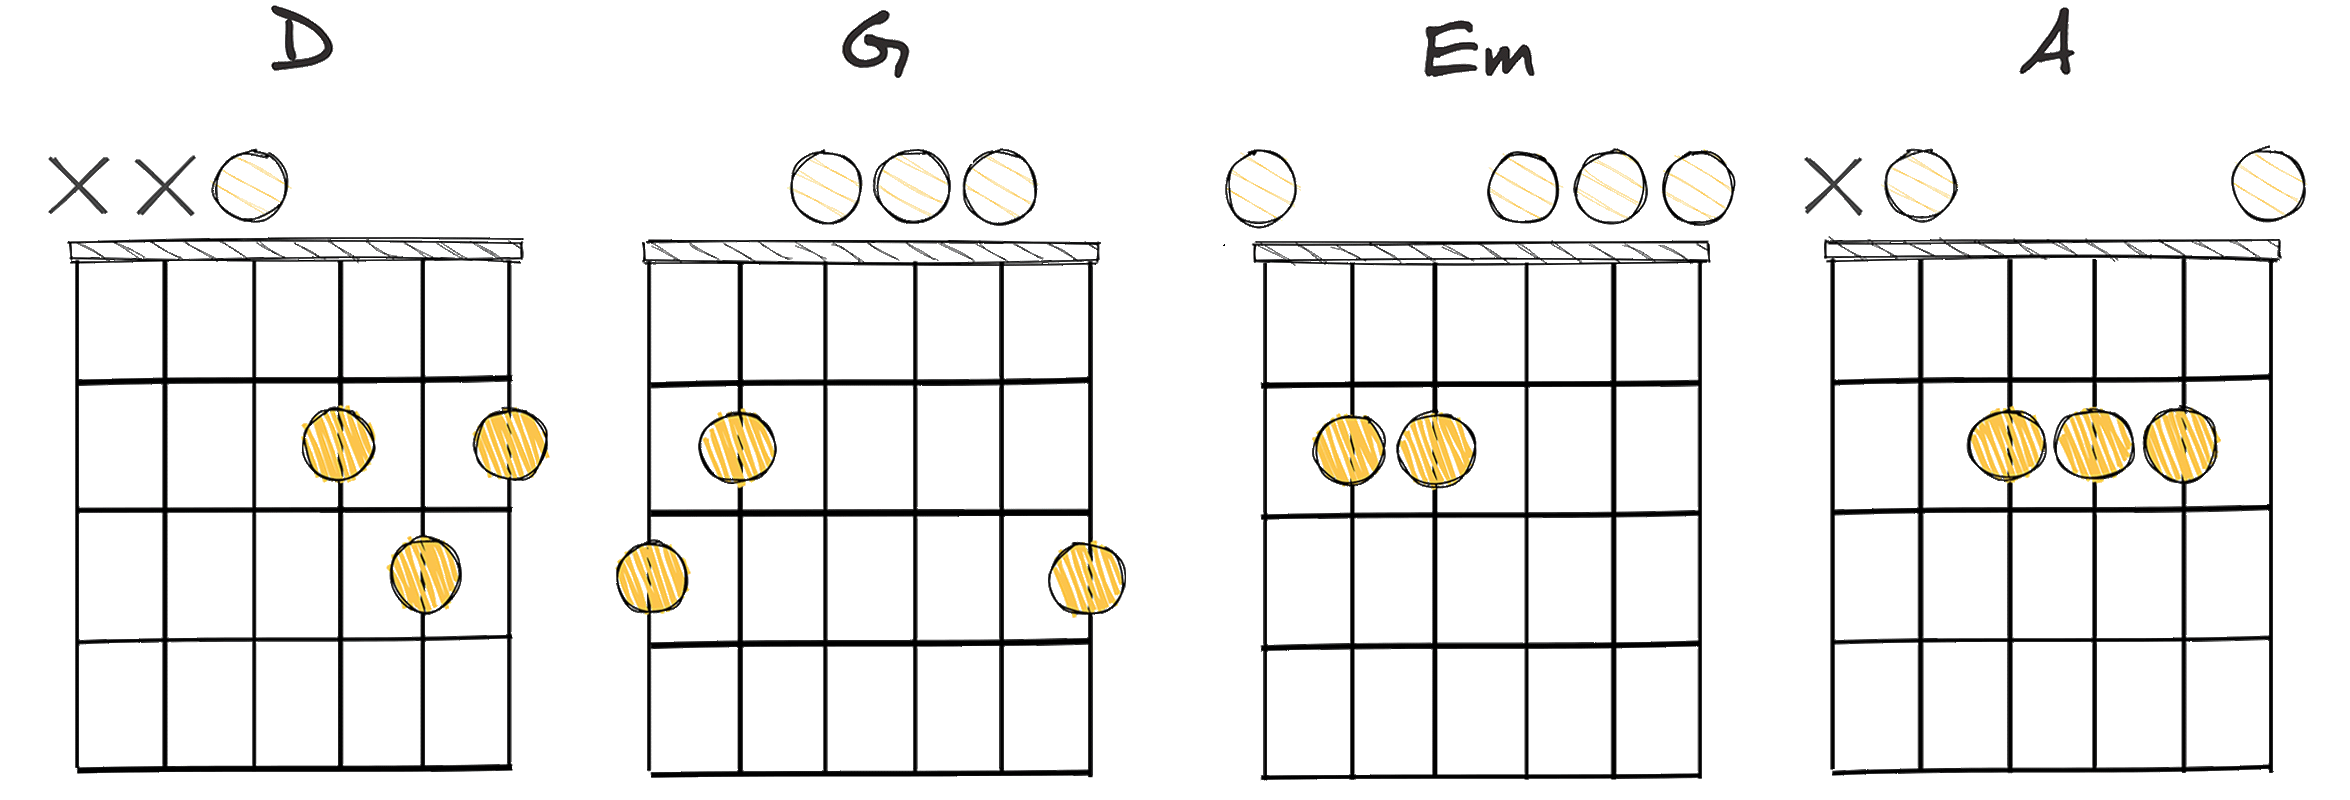 I-IV-ii-V (1-4-2-5) chords diagram